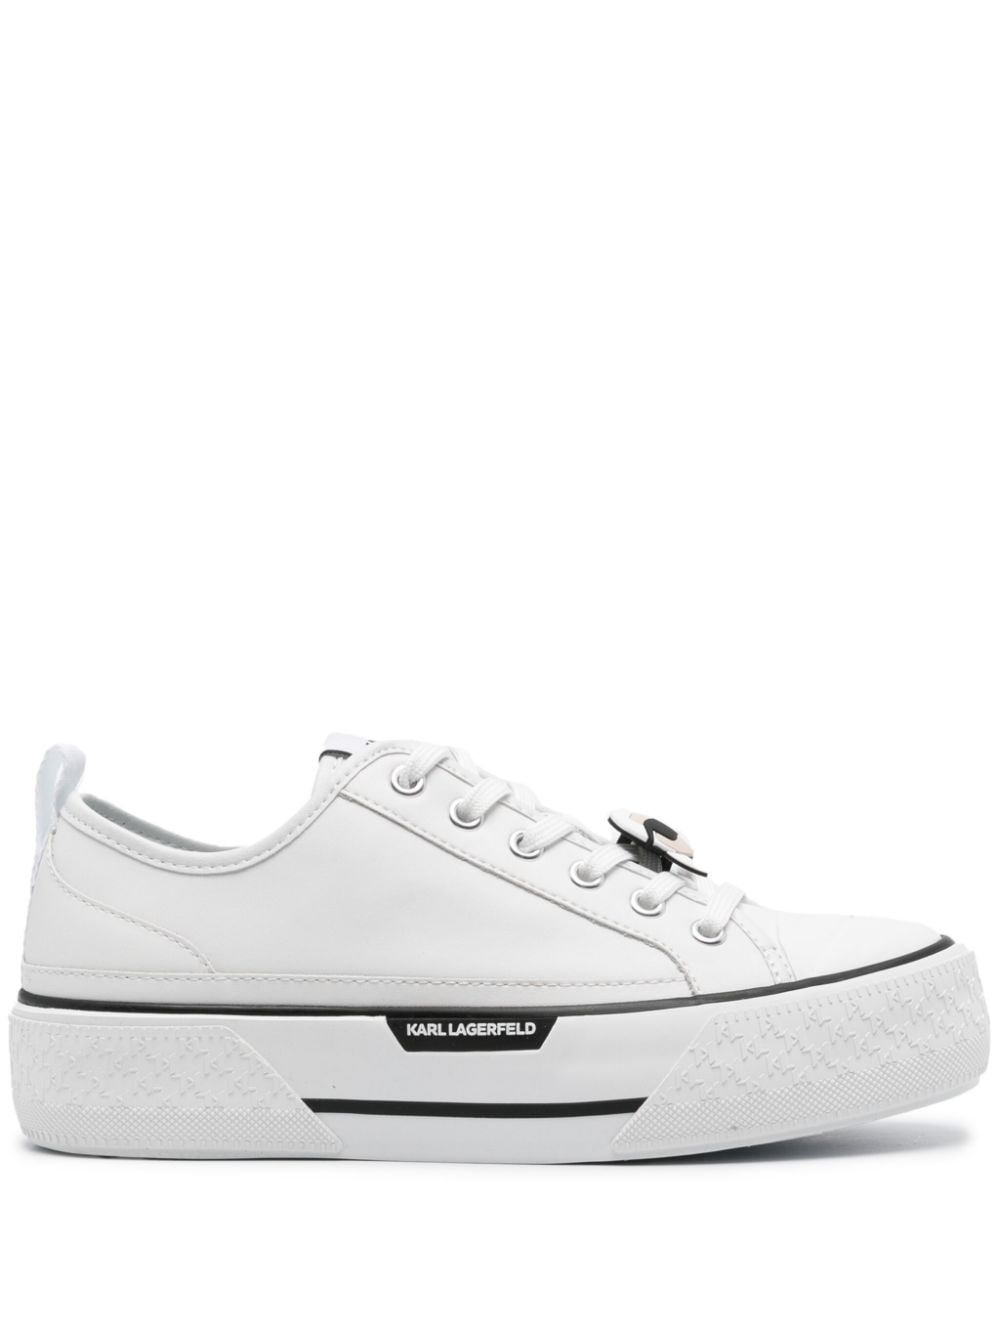 Karl Lagerfeld Kampus Max Iii Leather Sneakers In White